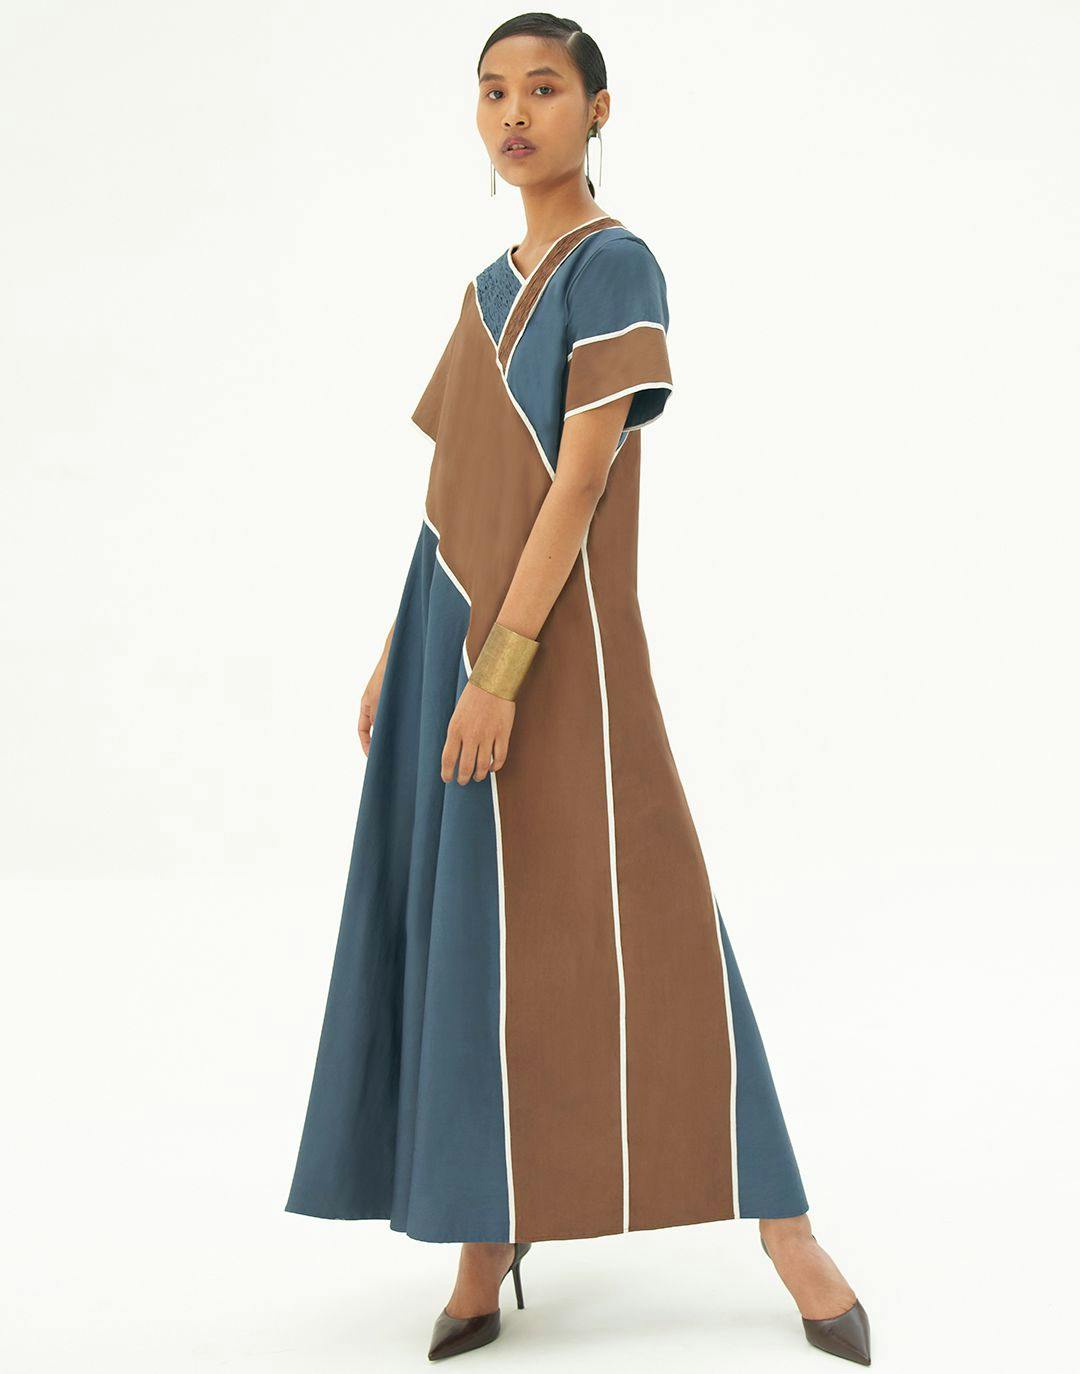 Classis Multi-Blocking Dress, a product by Corpora Studio